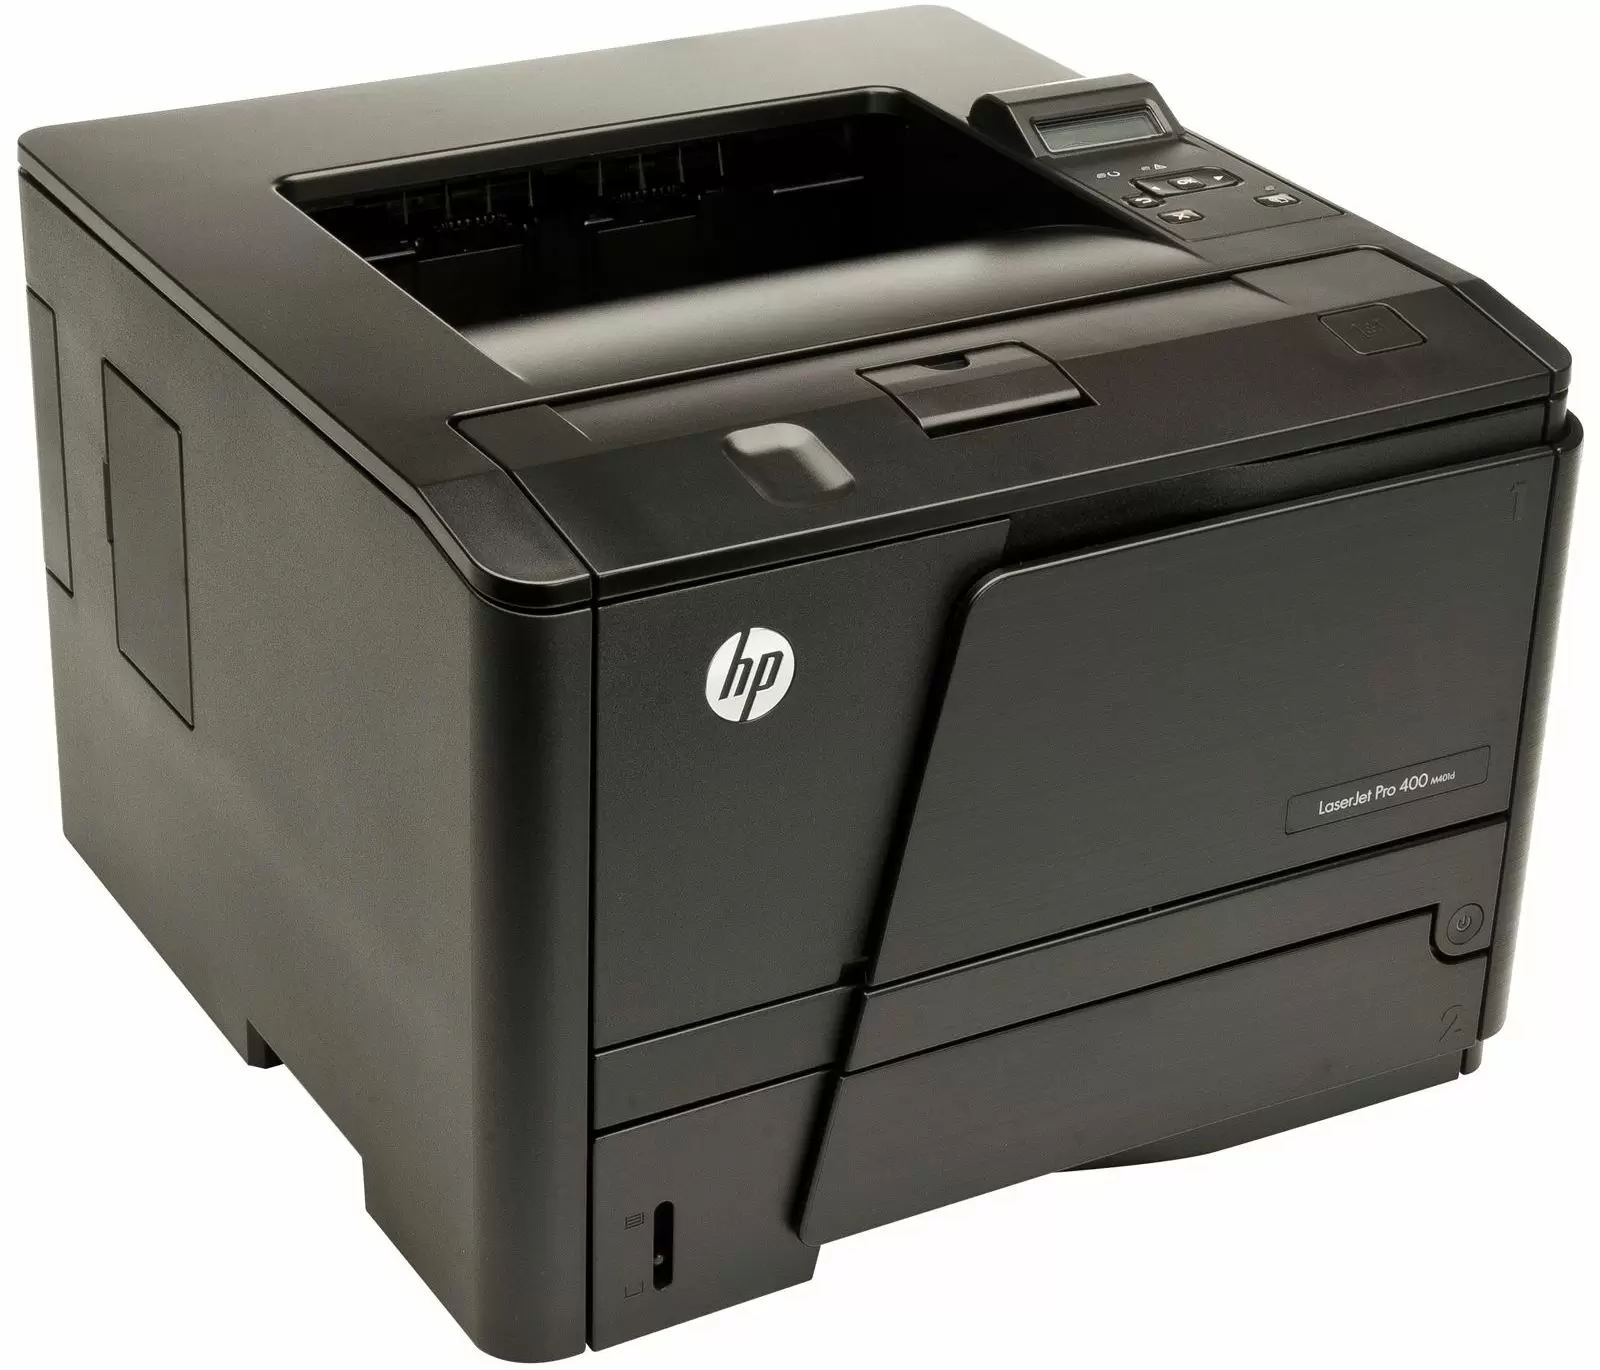 HP LaserJet PRO 400 M401d Printer Price in Pakistan, Specifications